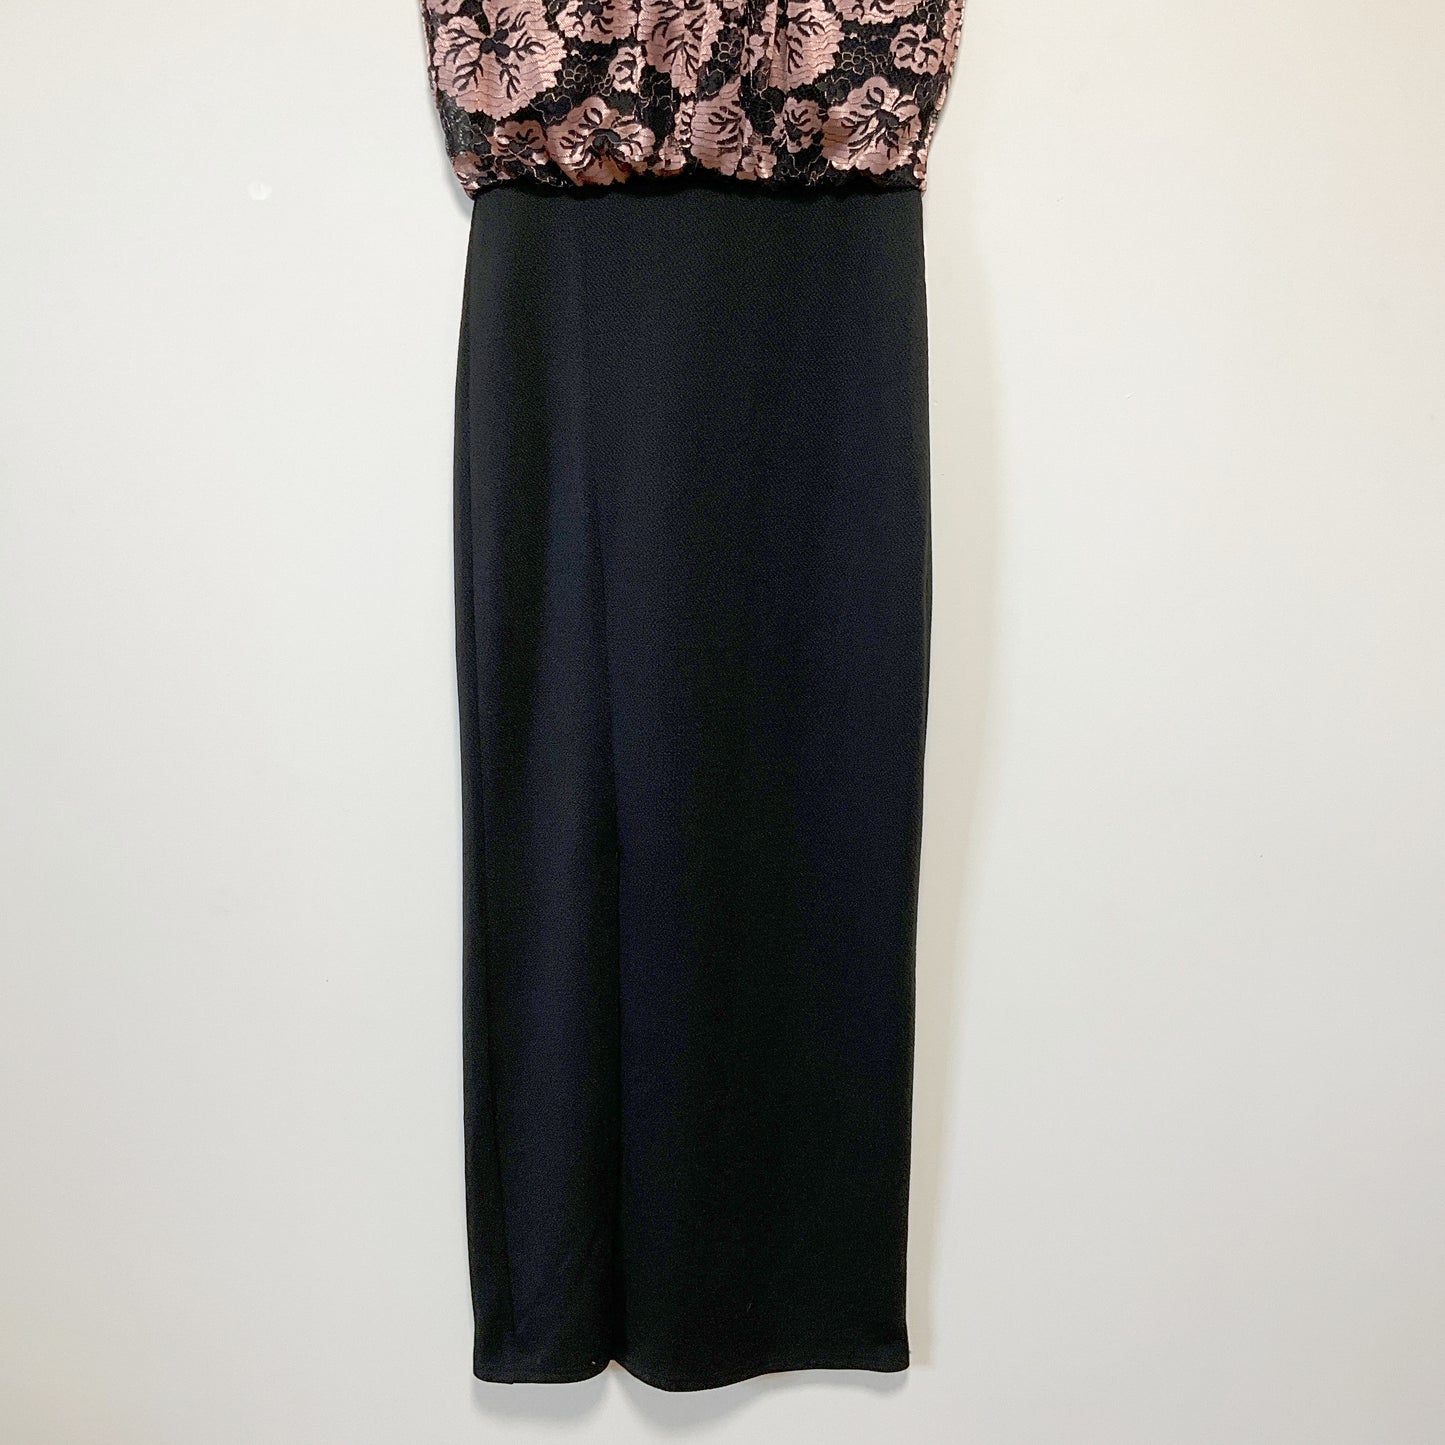 Jej388 Collection - Floral Maxi Dress